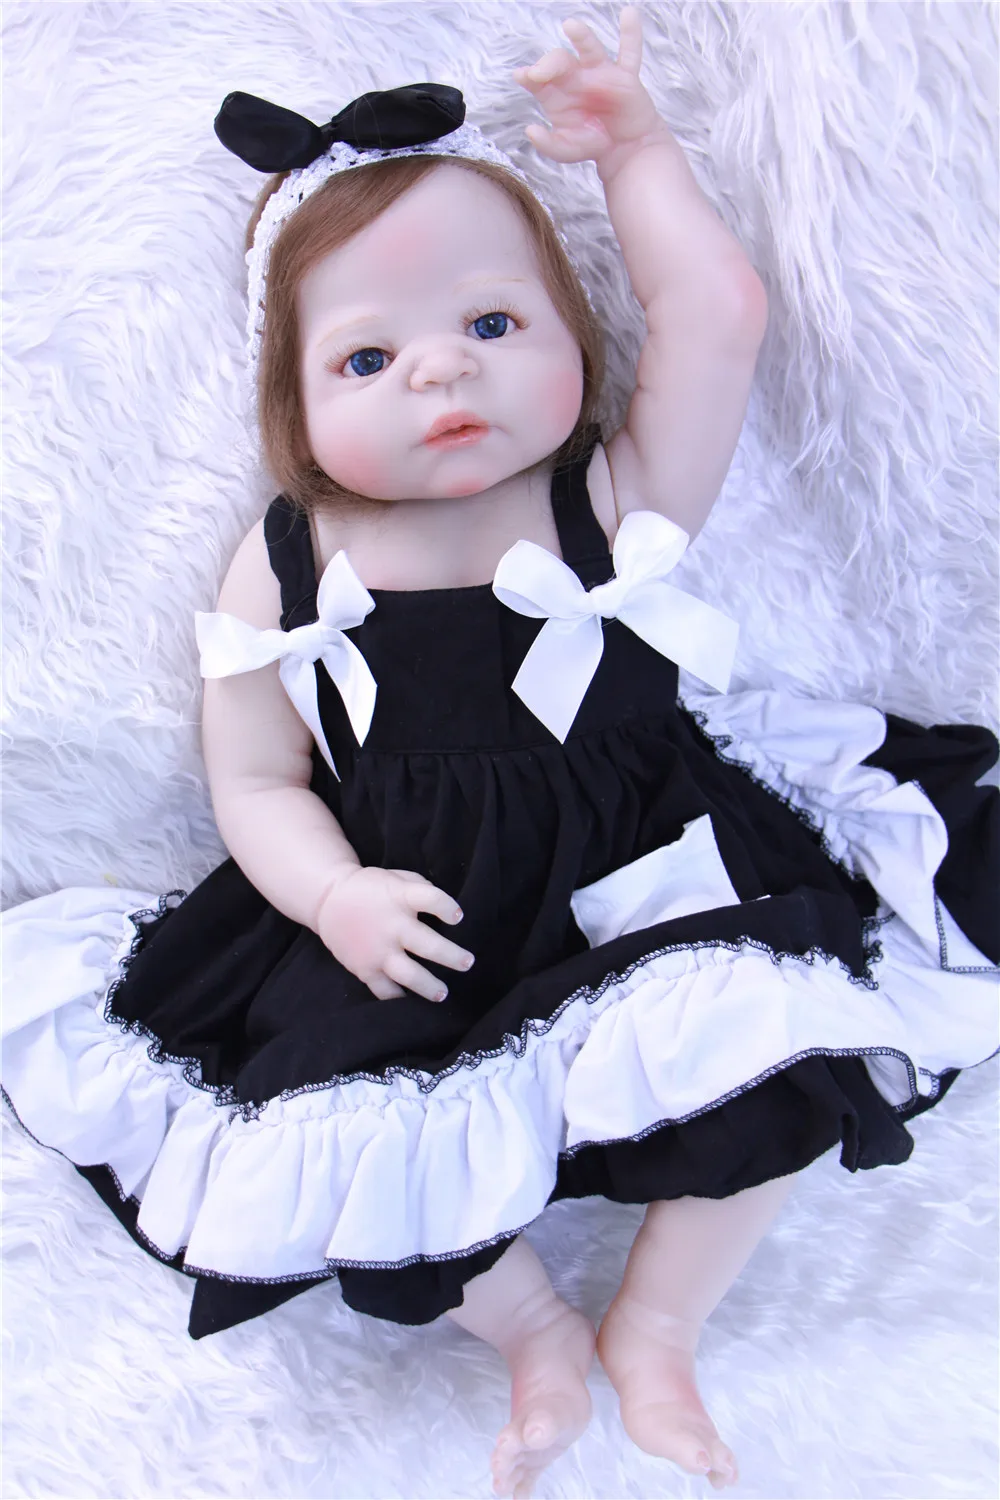 

22 inches New arrival Handmade Silicone vinyl Lifelike toddler Baby Bonecas girl kid doll bebe reborn menina de silicone 55cm